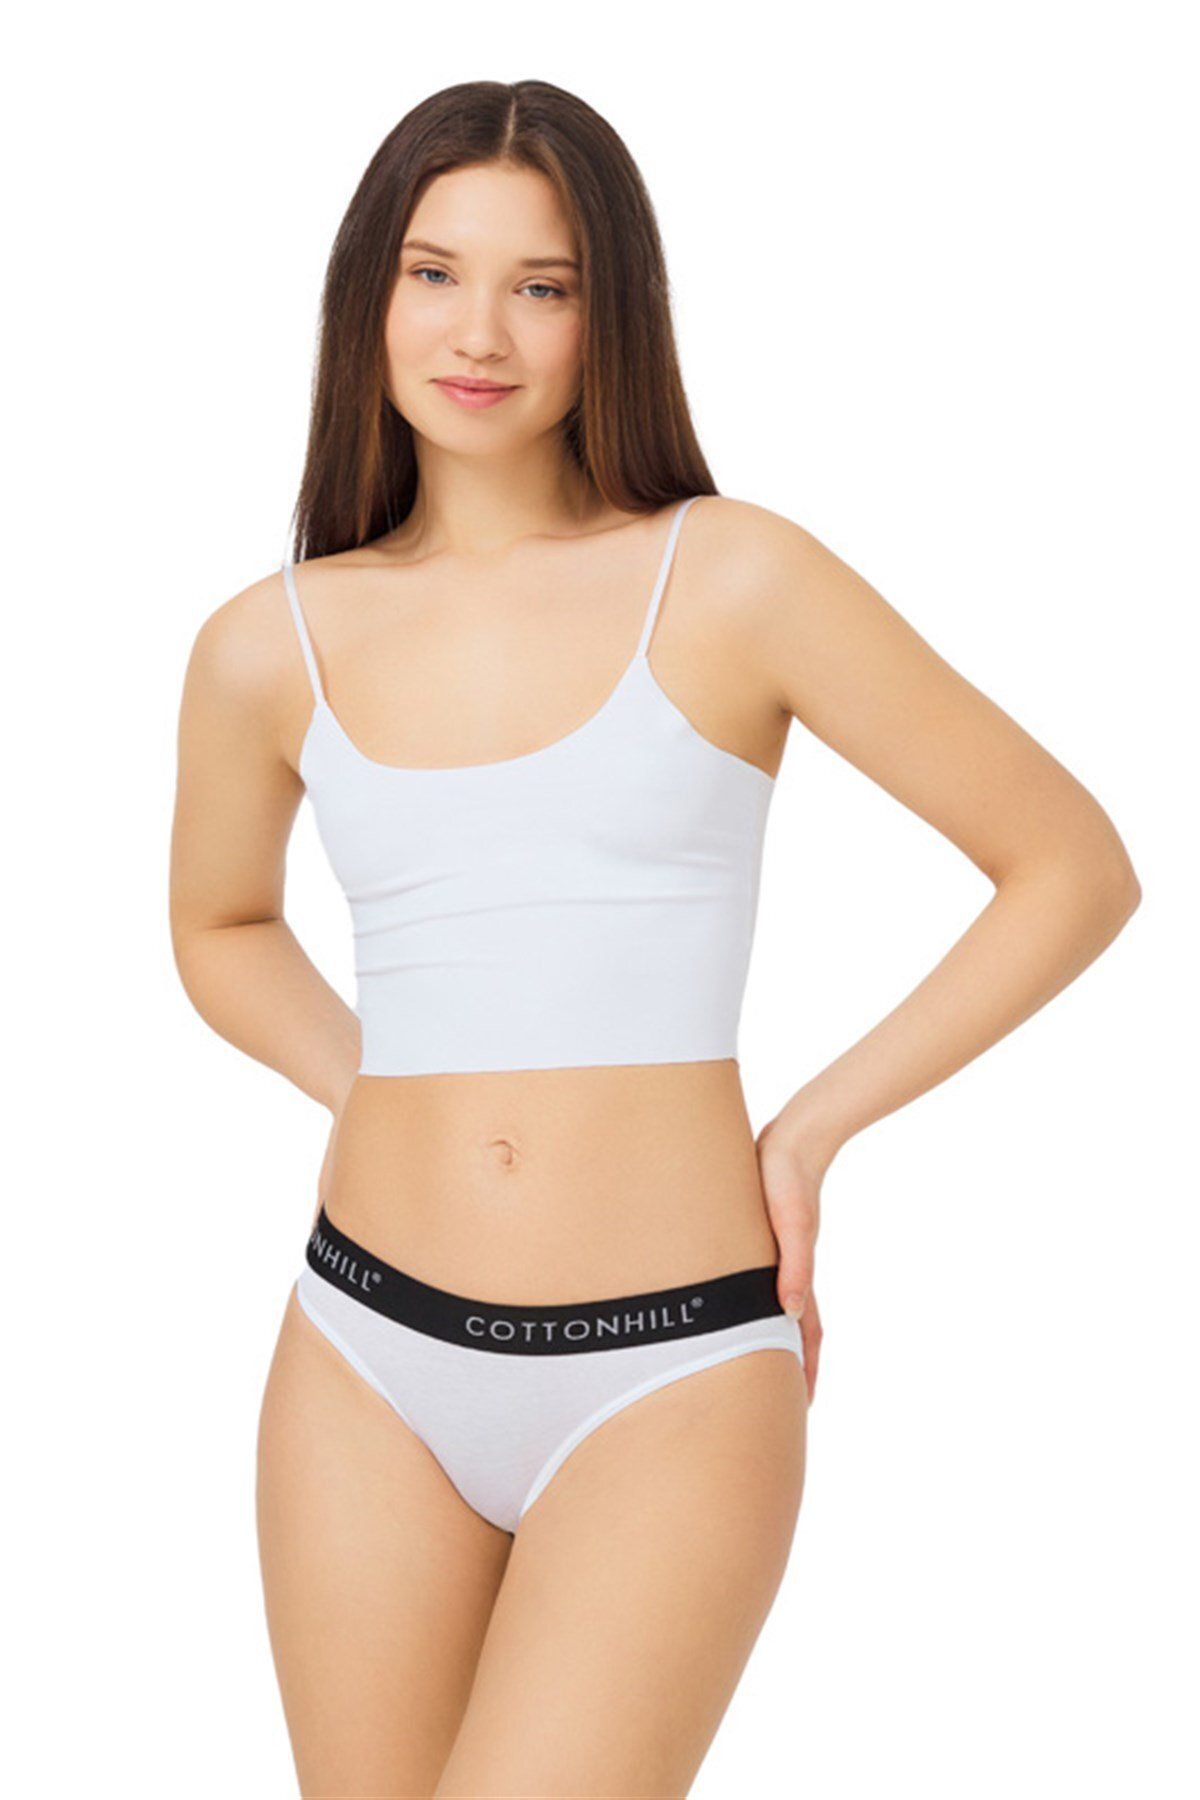 Cottonhill Beyaz Pamuklu Siyah Lastikli Basic Kadın Bikini Külot